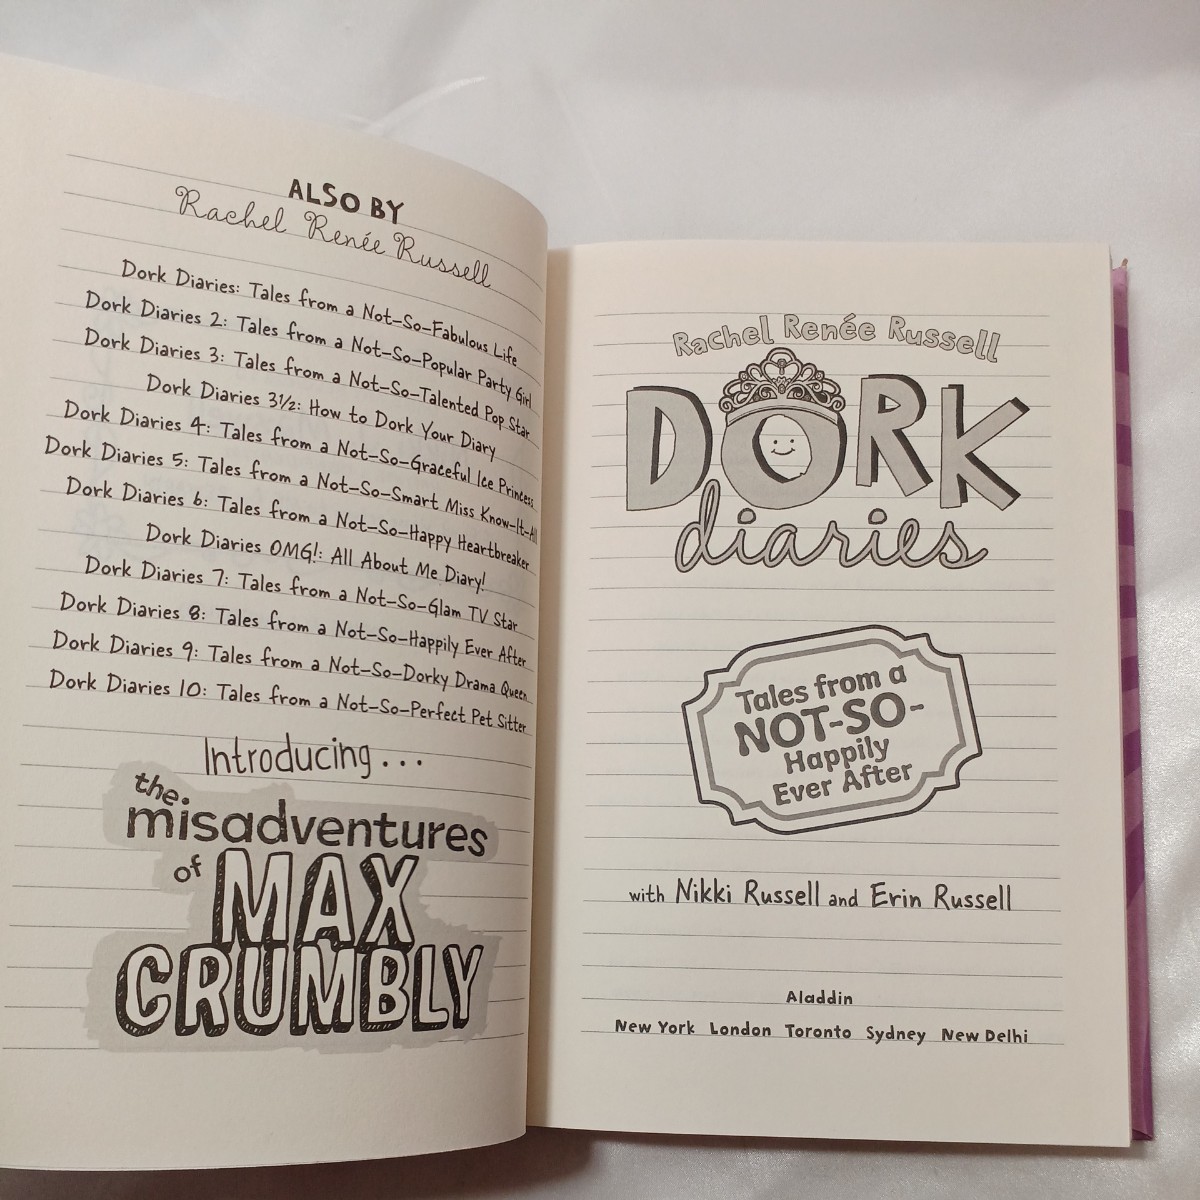 zaa-434♪Dork Diaries 8 : Tales from a Not-So-Happily Ever after (Dork Diaries) Russell, Rachel Rene/ Russell, Rachel Rene (ILT)